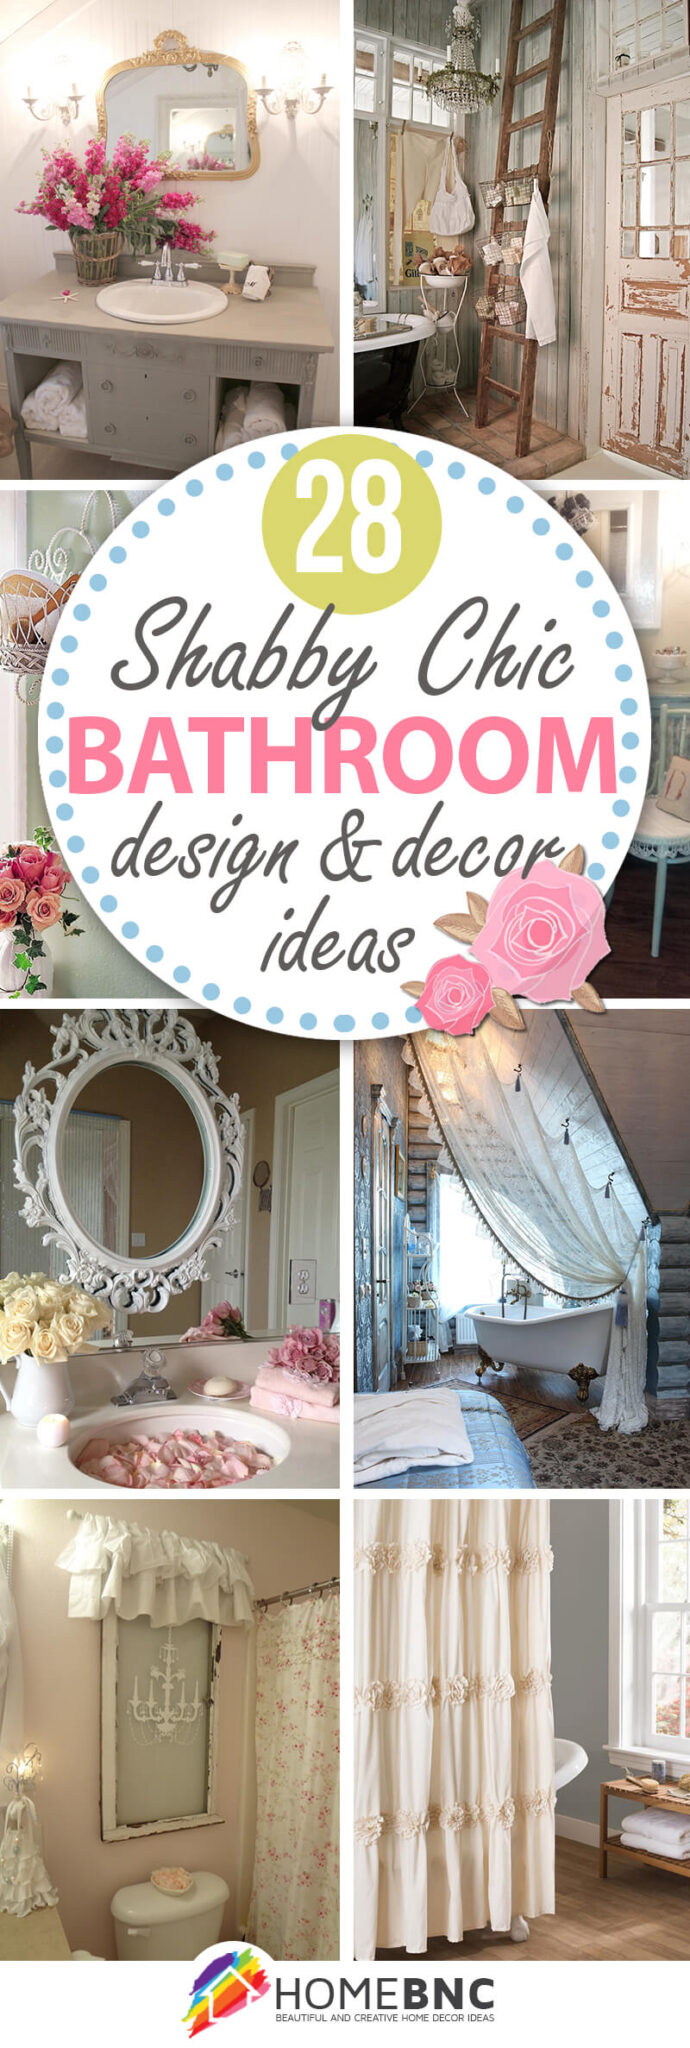 Shabby Chic Bathroom Ideas Pinterest Share Homebnc 690x2048 